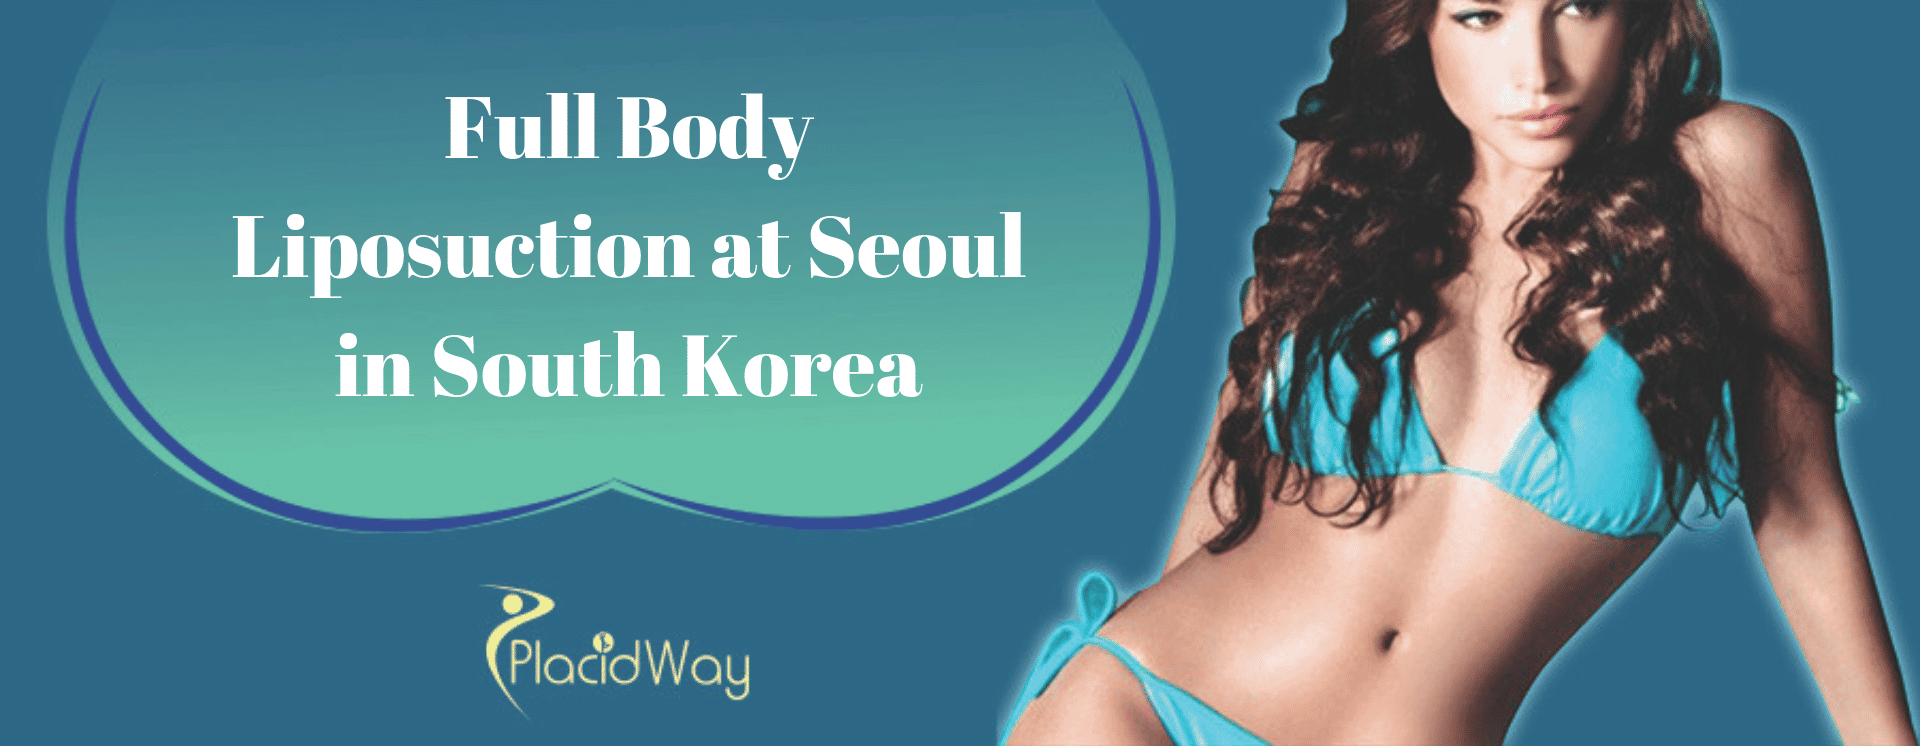 Full Body Liposuction at Seoul in South Korea